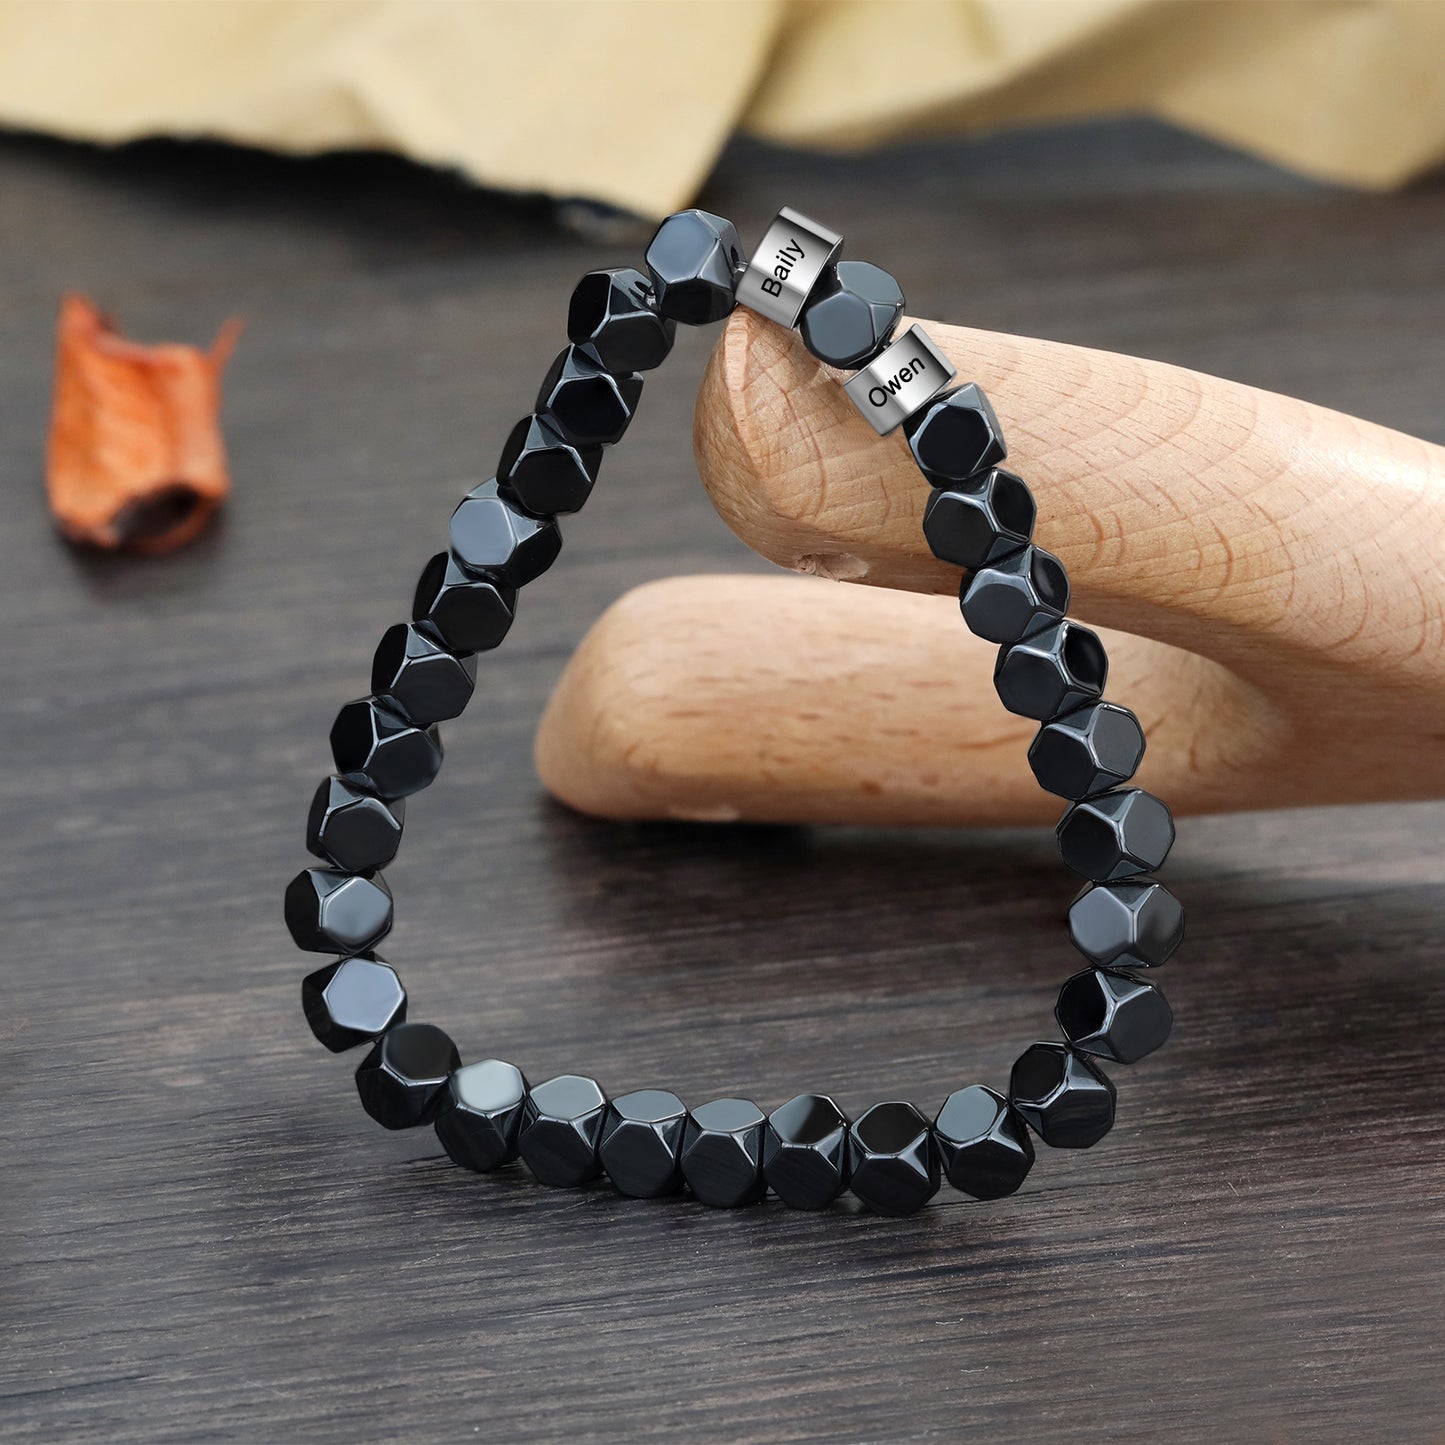 Black Gallstone bead Bracelet Custom Name